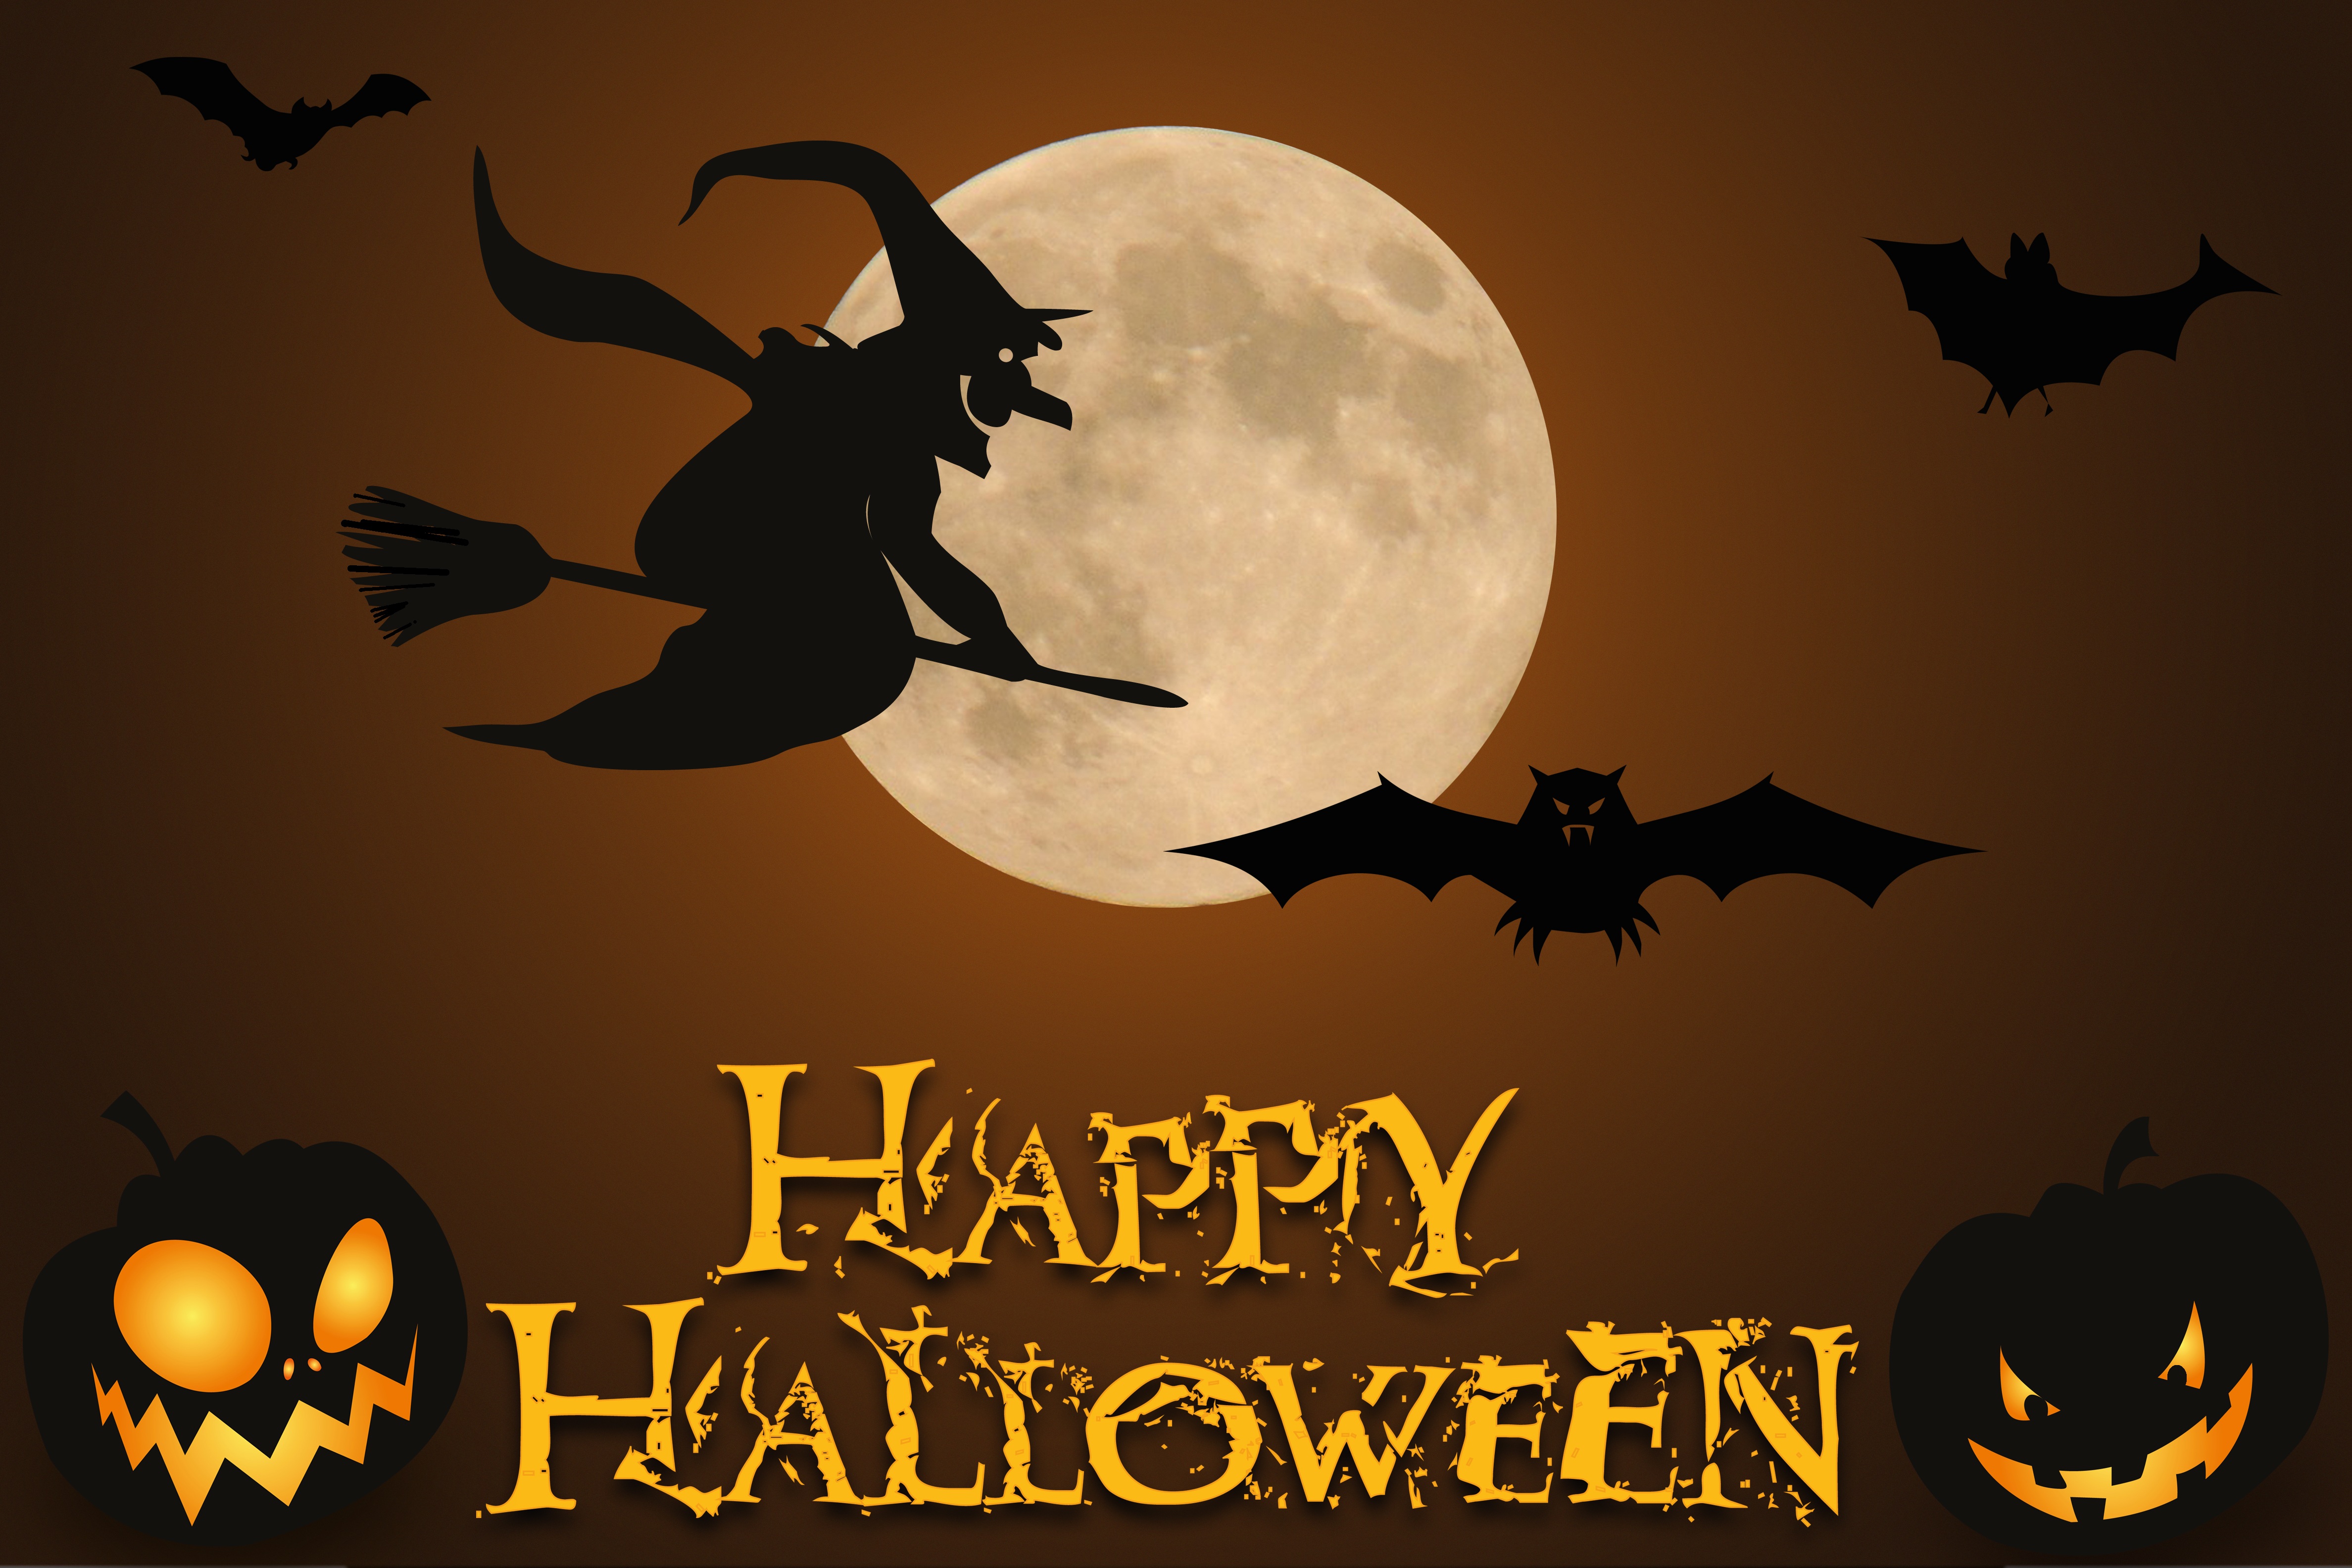 holiday, halloween, bat, happy halloween, jack o' lantern, moon, witch